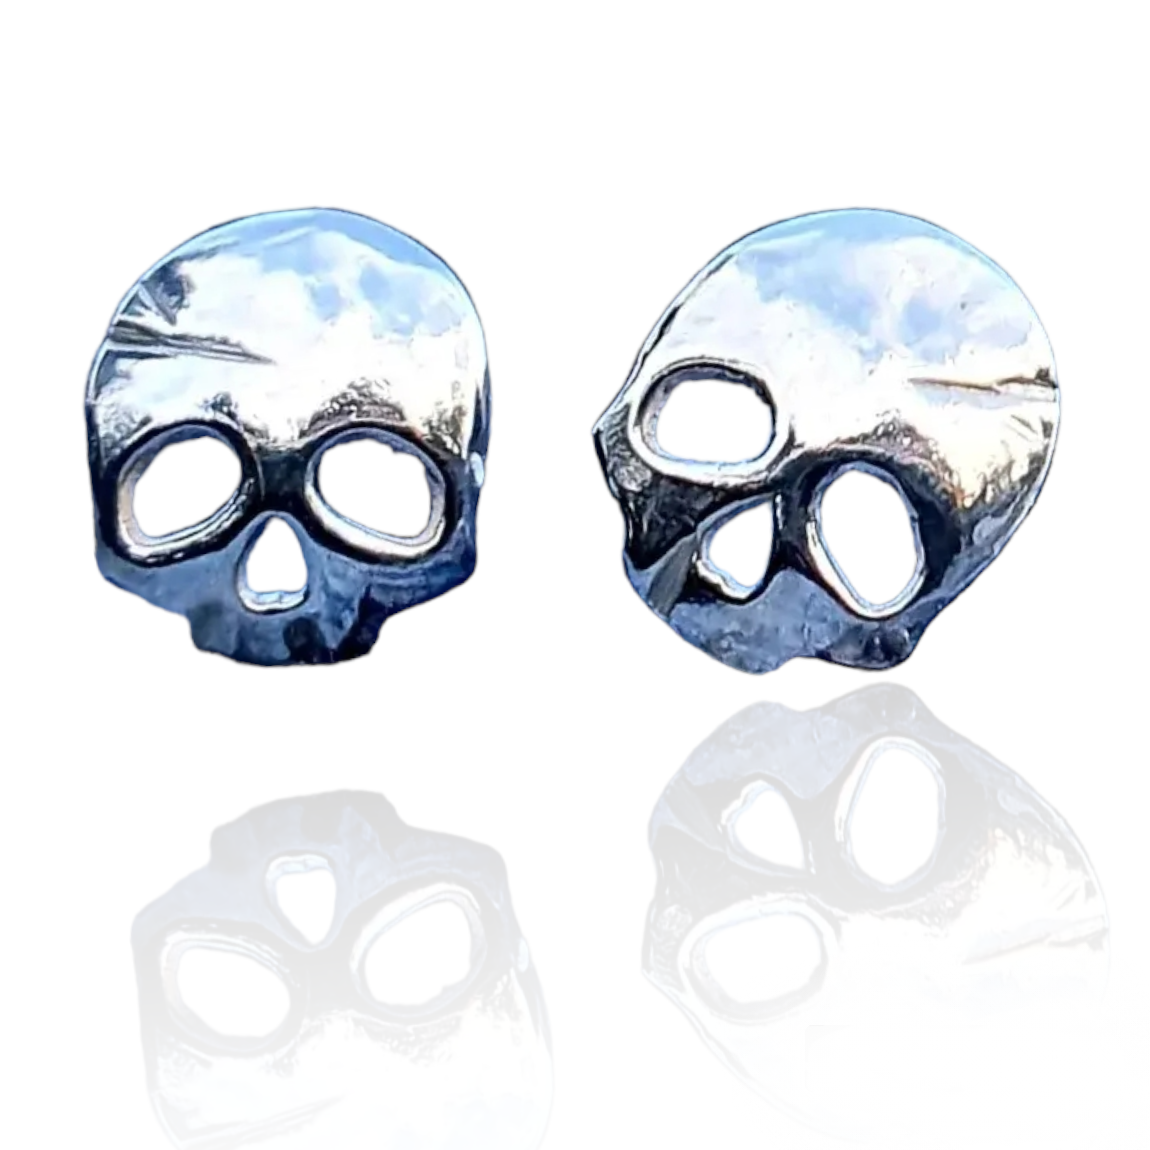 Clí skull earrings - Sterling silver earstuds